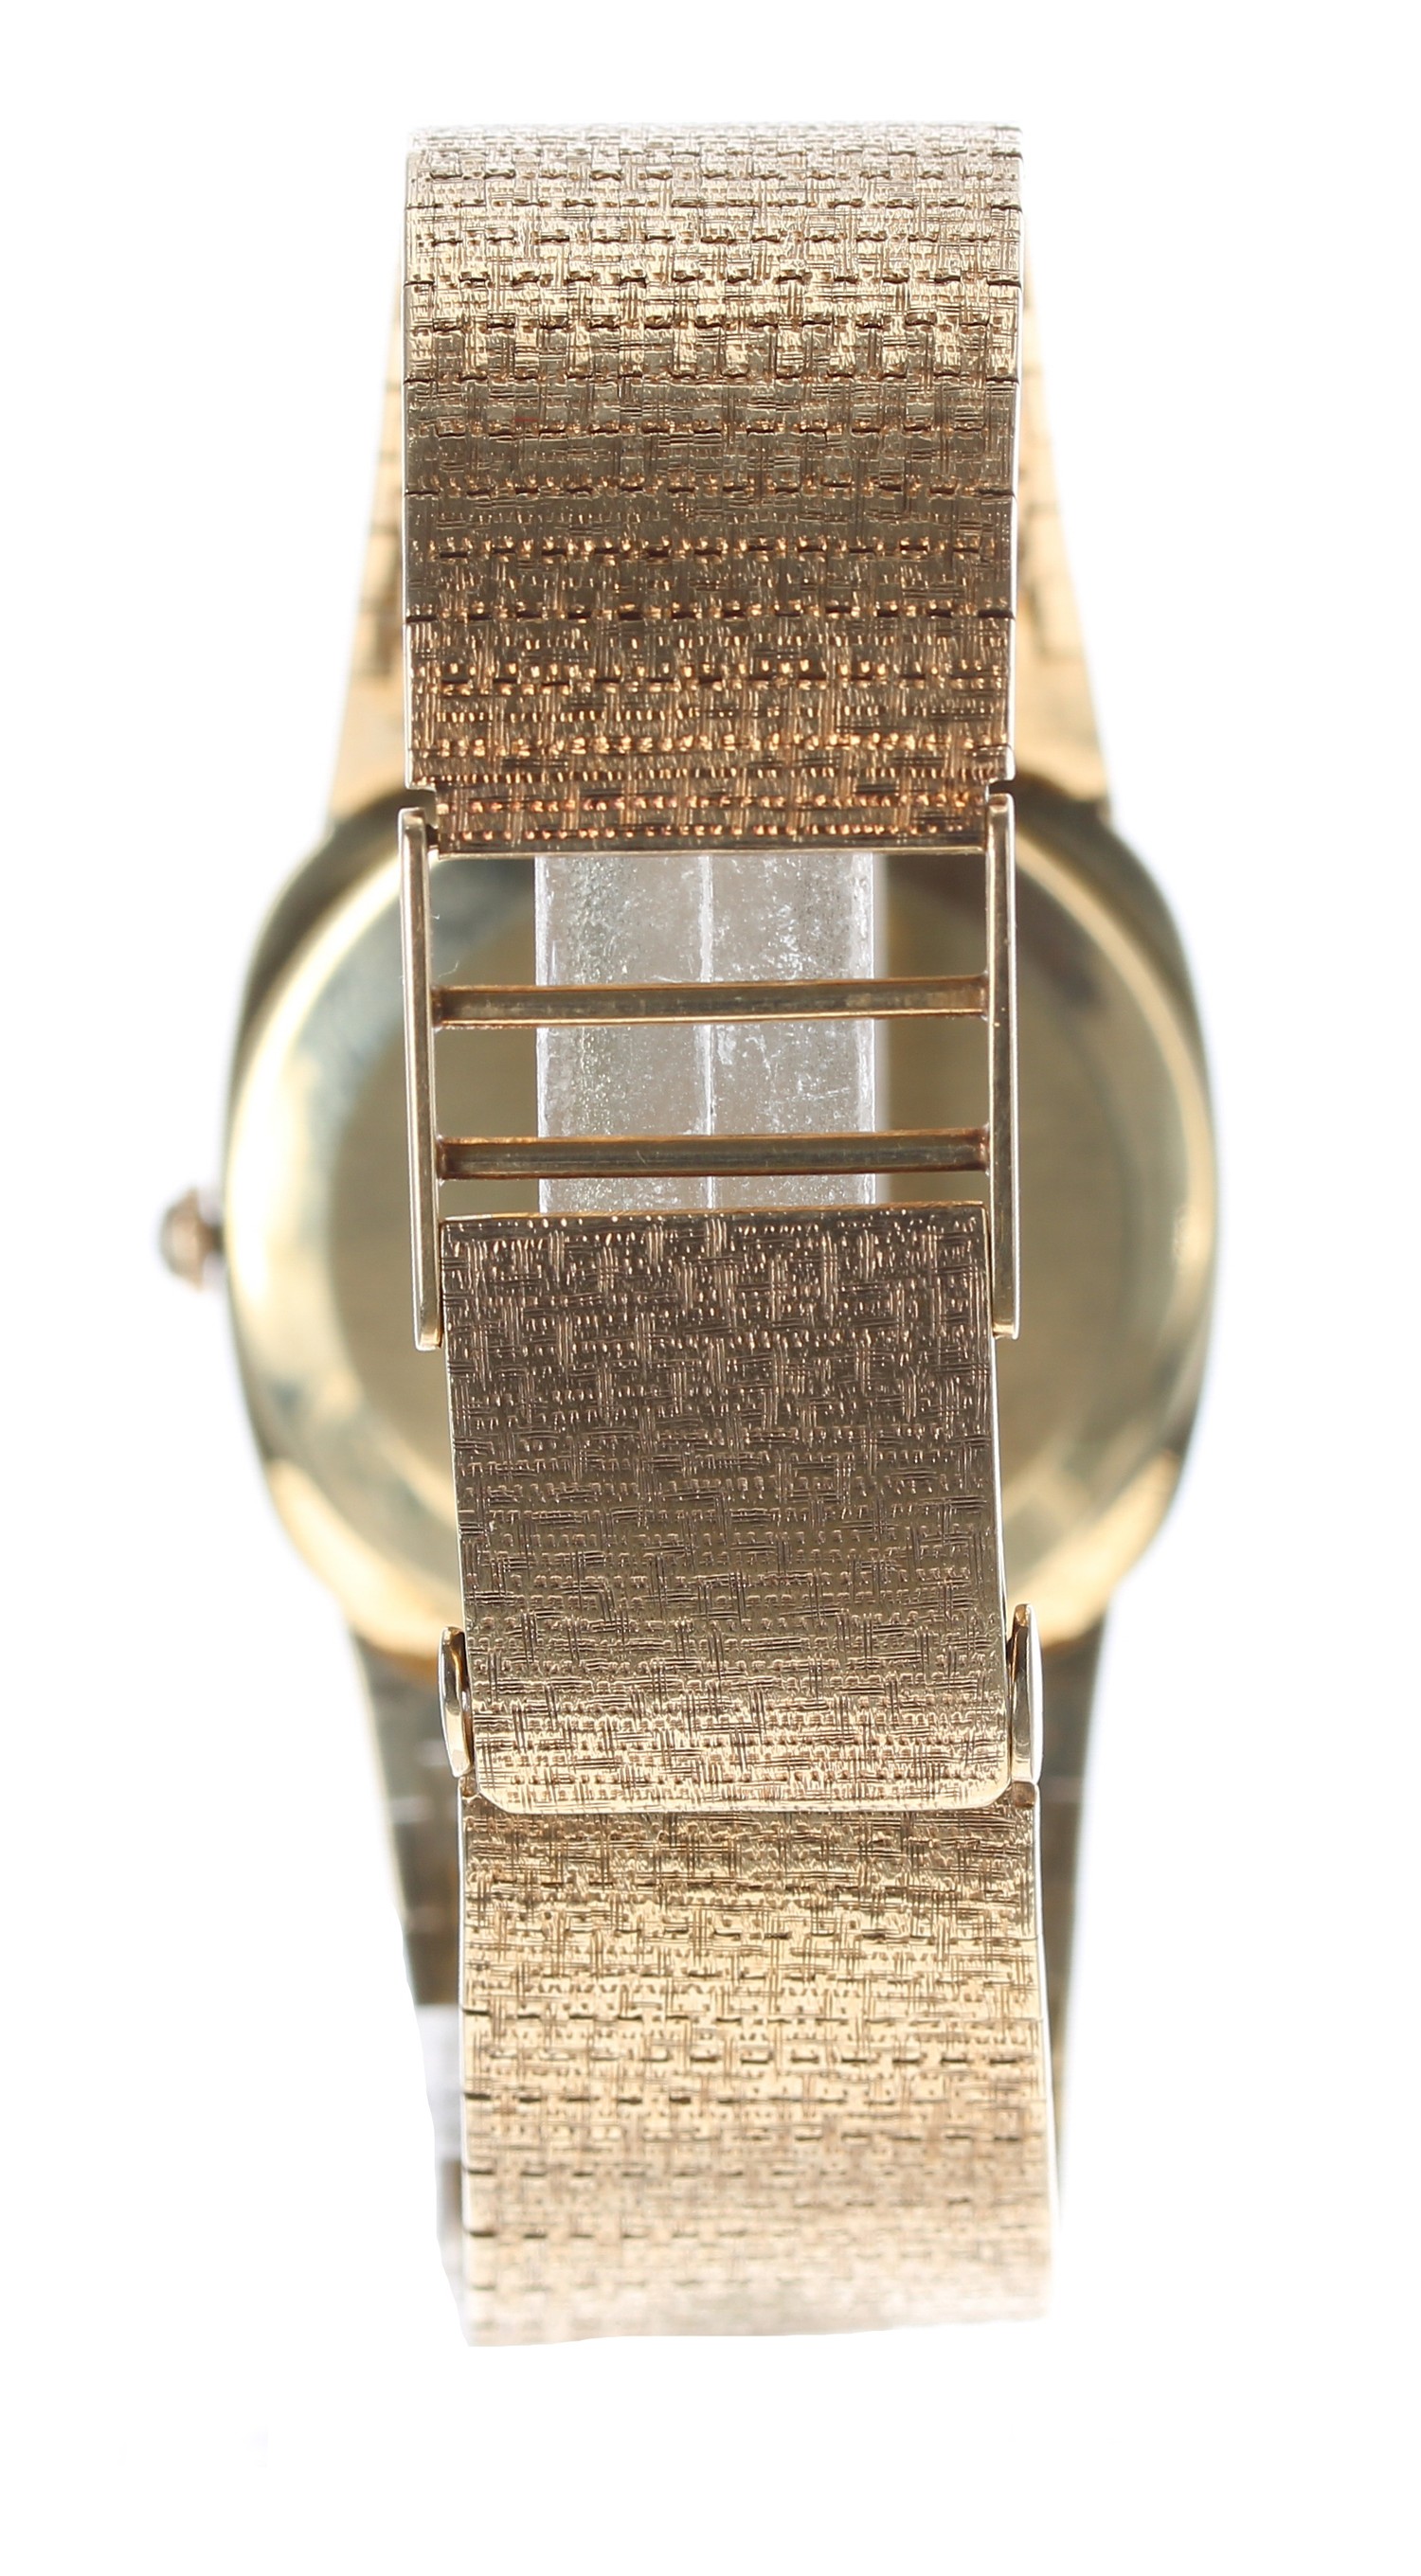 Asprey 9ct gentleman's bracelet wristwatch, import hallmarks for London 1974, signed champagne - Image 3 of 5